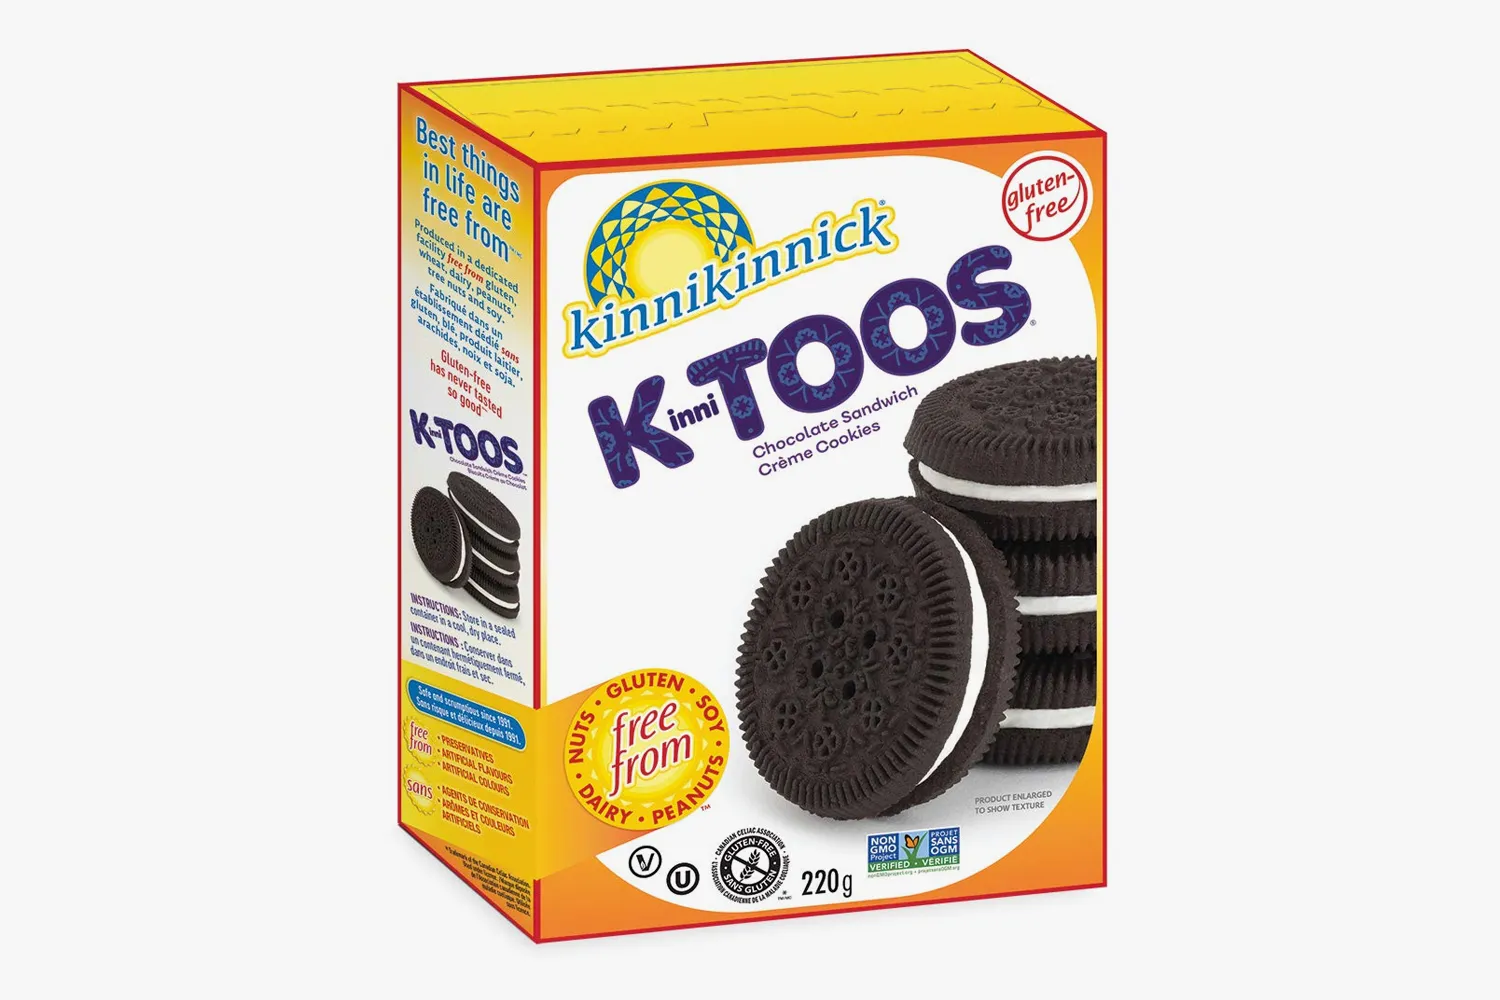 KinniToos Gluten-Free Cookies